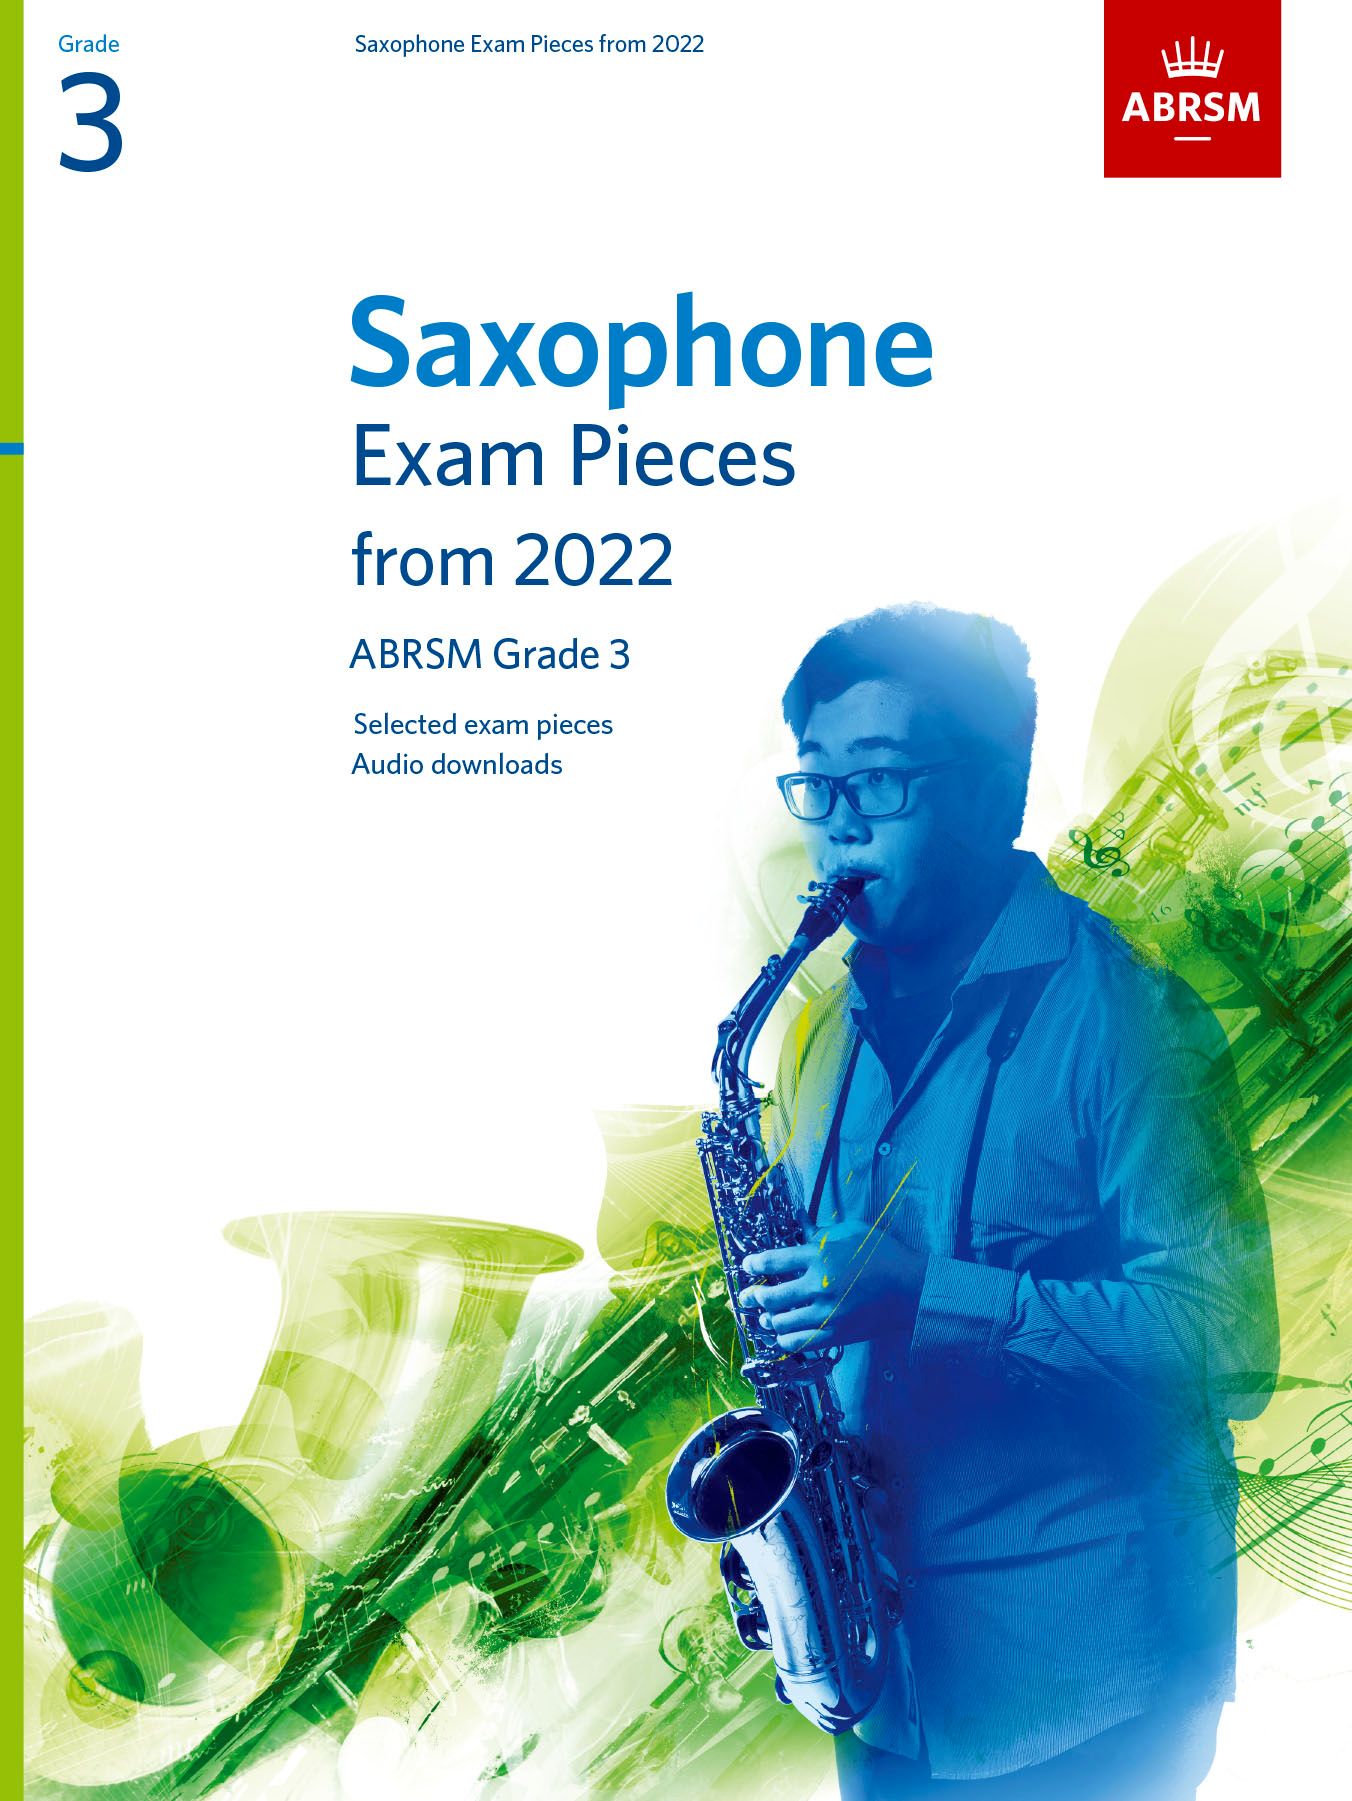 ABRSM Saxophone Exam Pieces from 2022, Grade 3